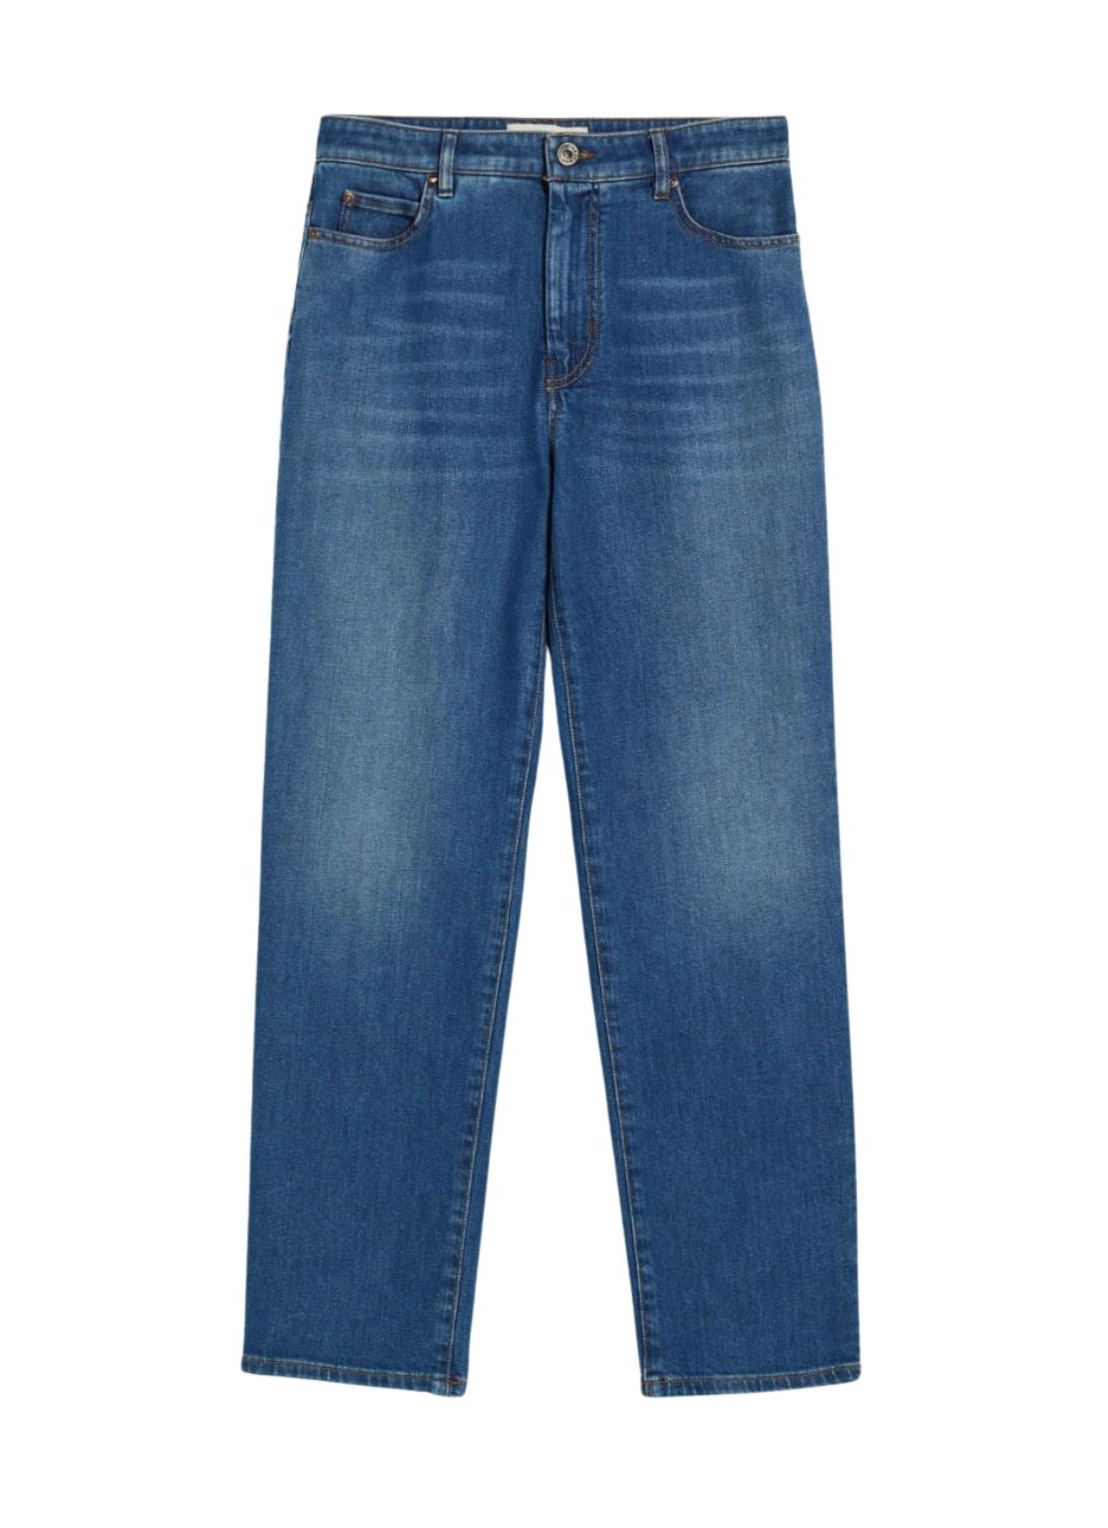 Pantalon jeans weekend max mara denim woman ortisei 2415181061600 008 talla Azul
 